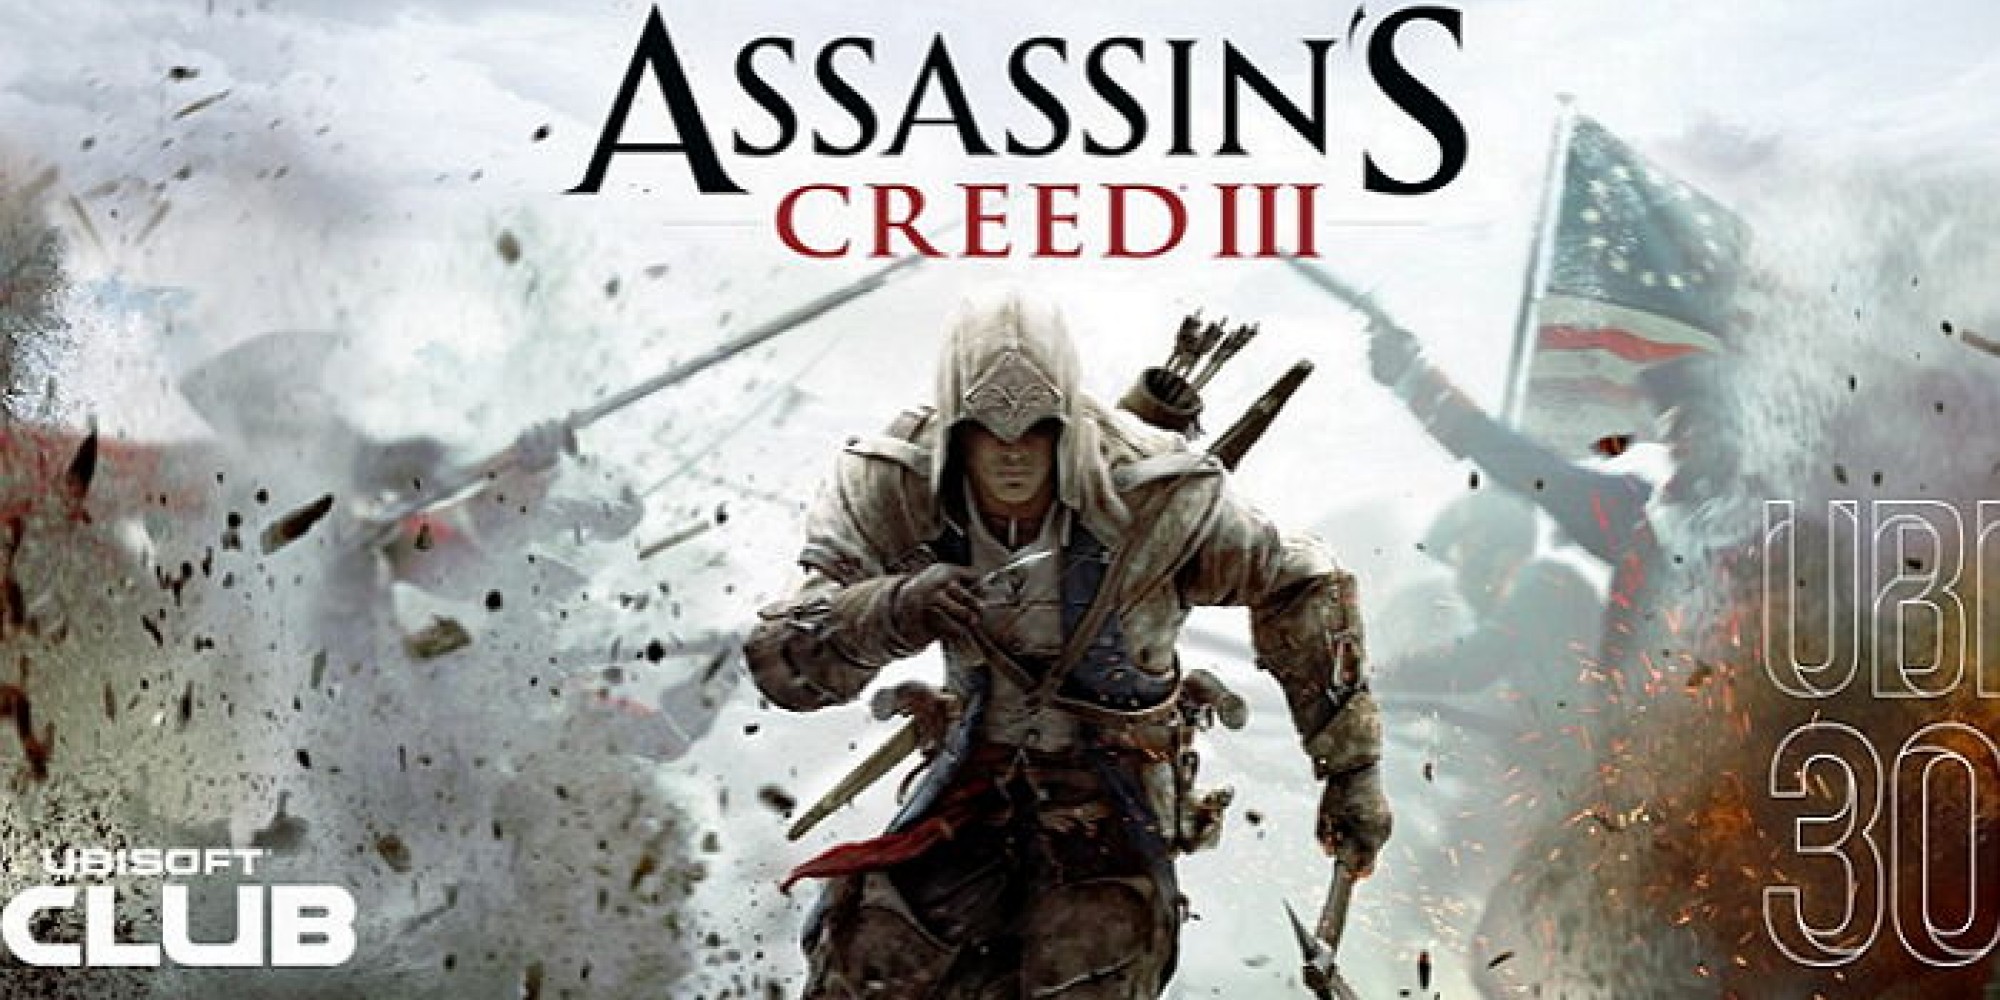 Assassins 3 механики. Assassin's Creed 4 фон Steam. Ассасин Крид мемы блогер. Assassins Creed 4 PNG. Assassin's Creed III.